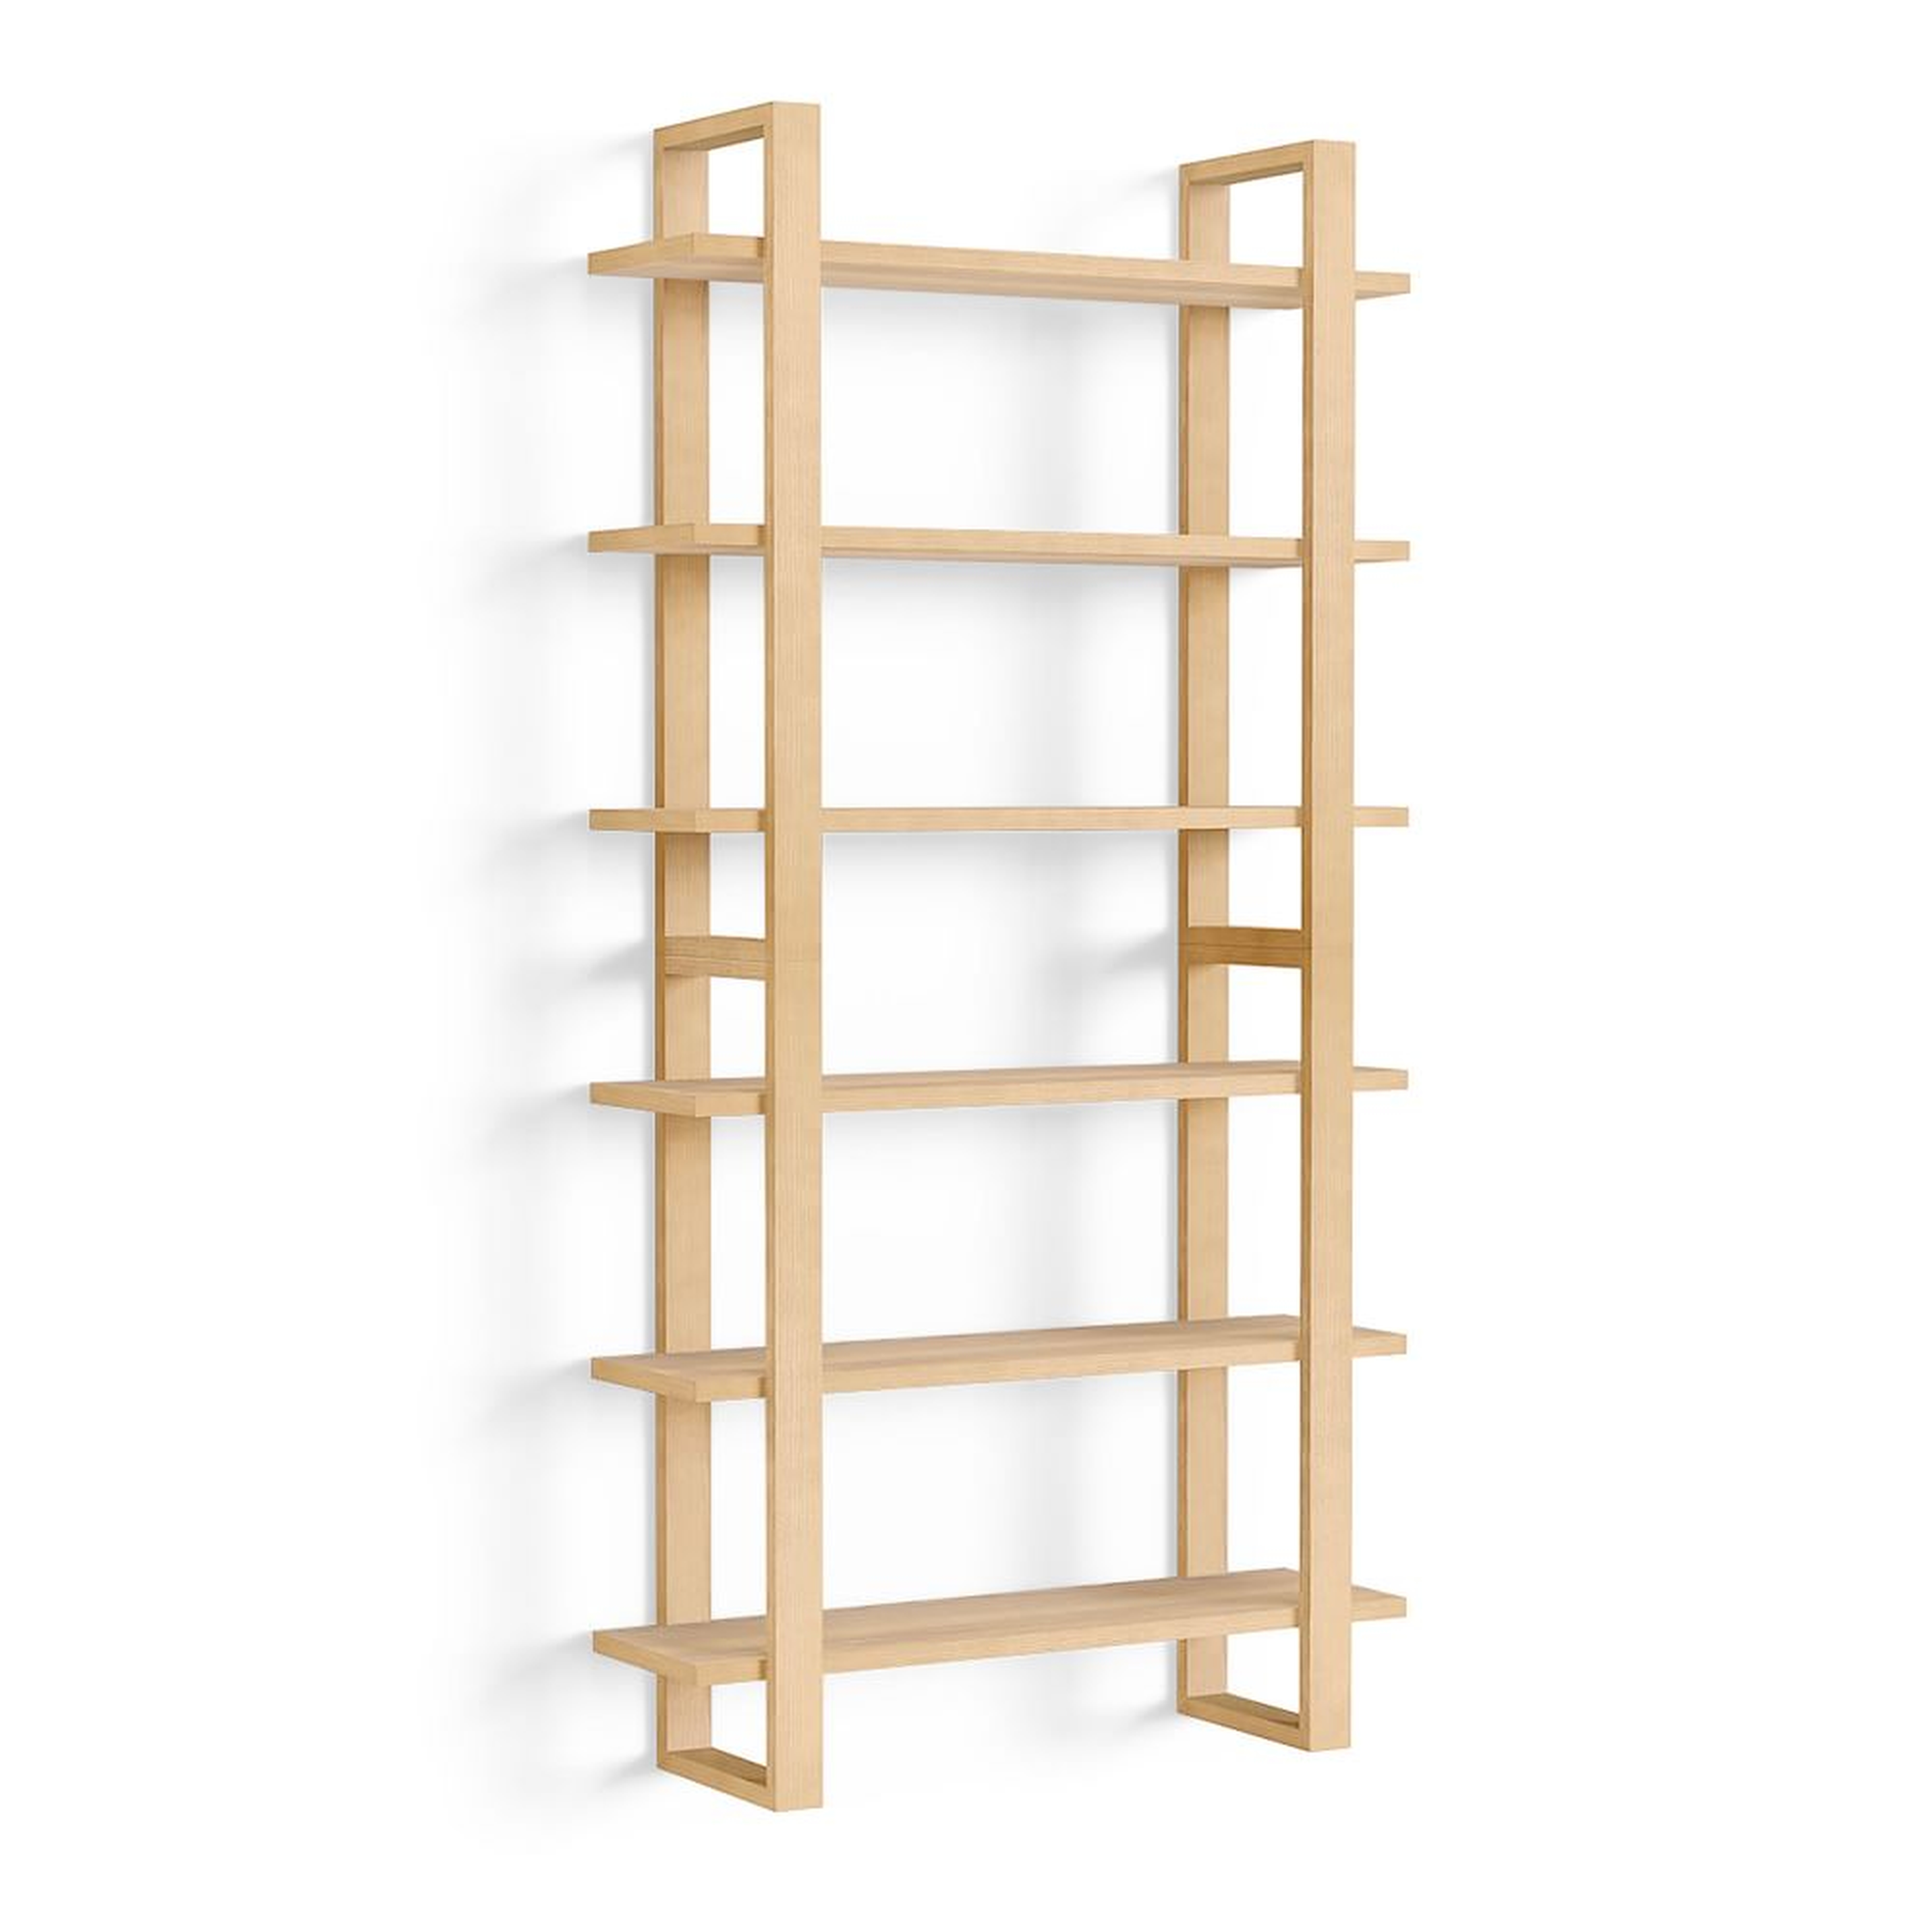 Index Wall Shelf, 32"x32", Oak, Set of 2 - West Elm